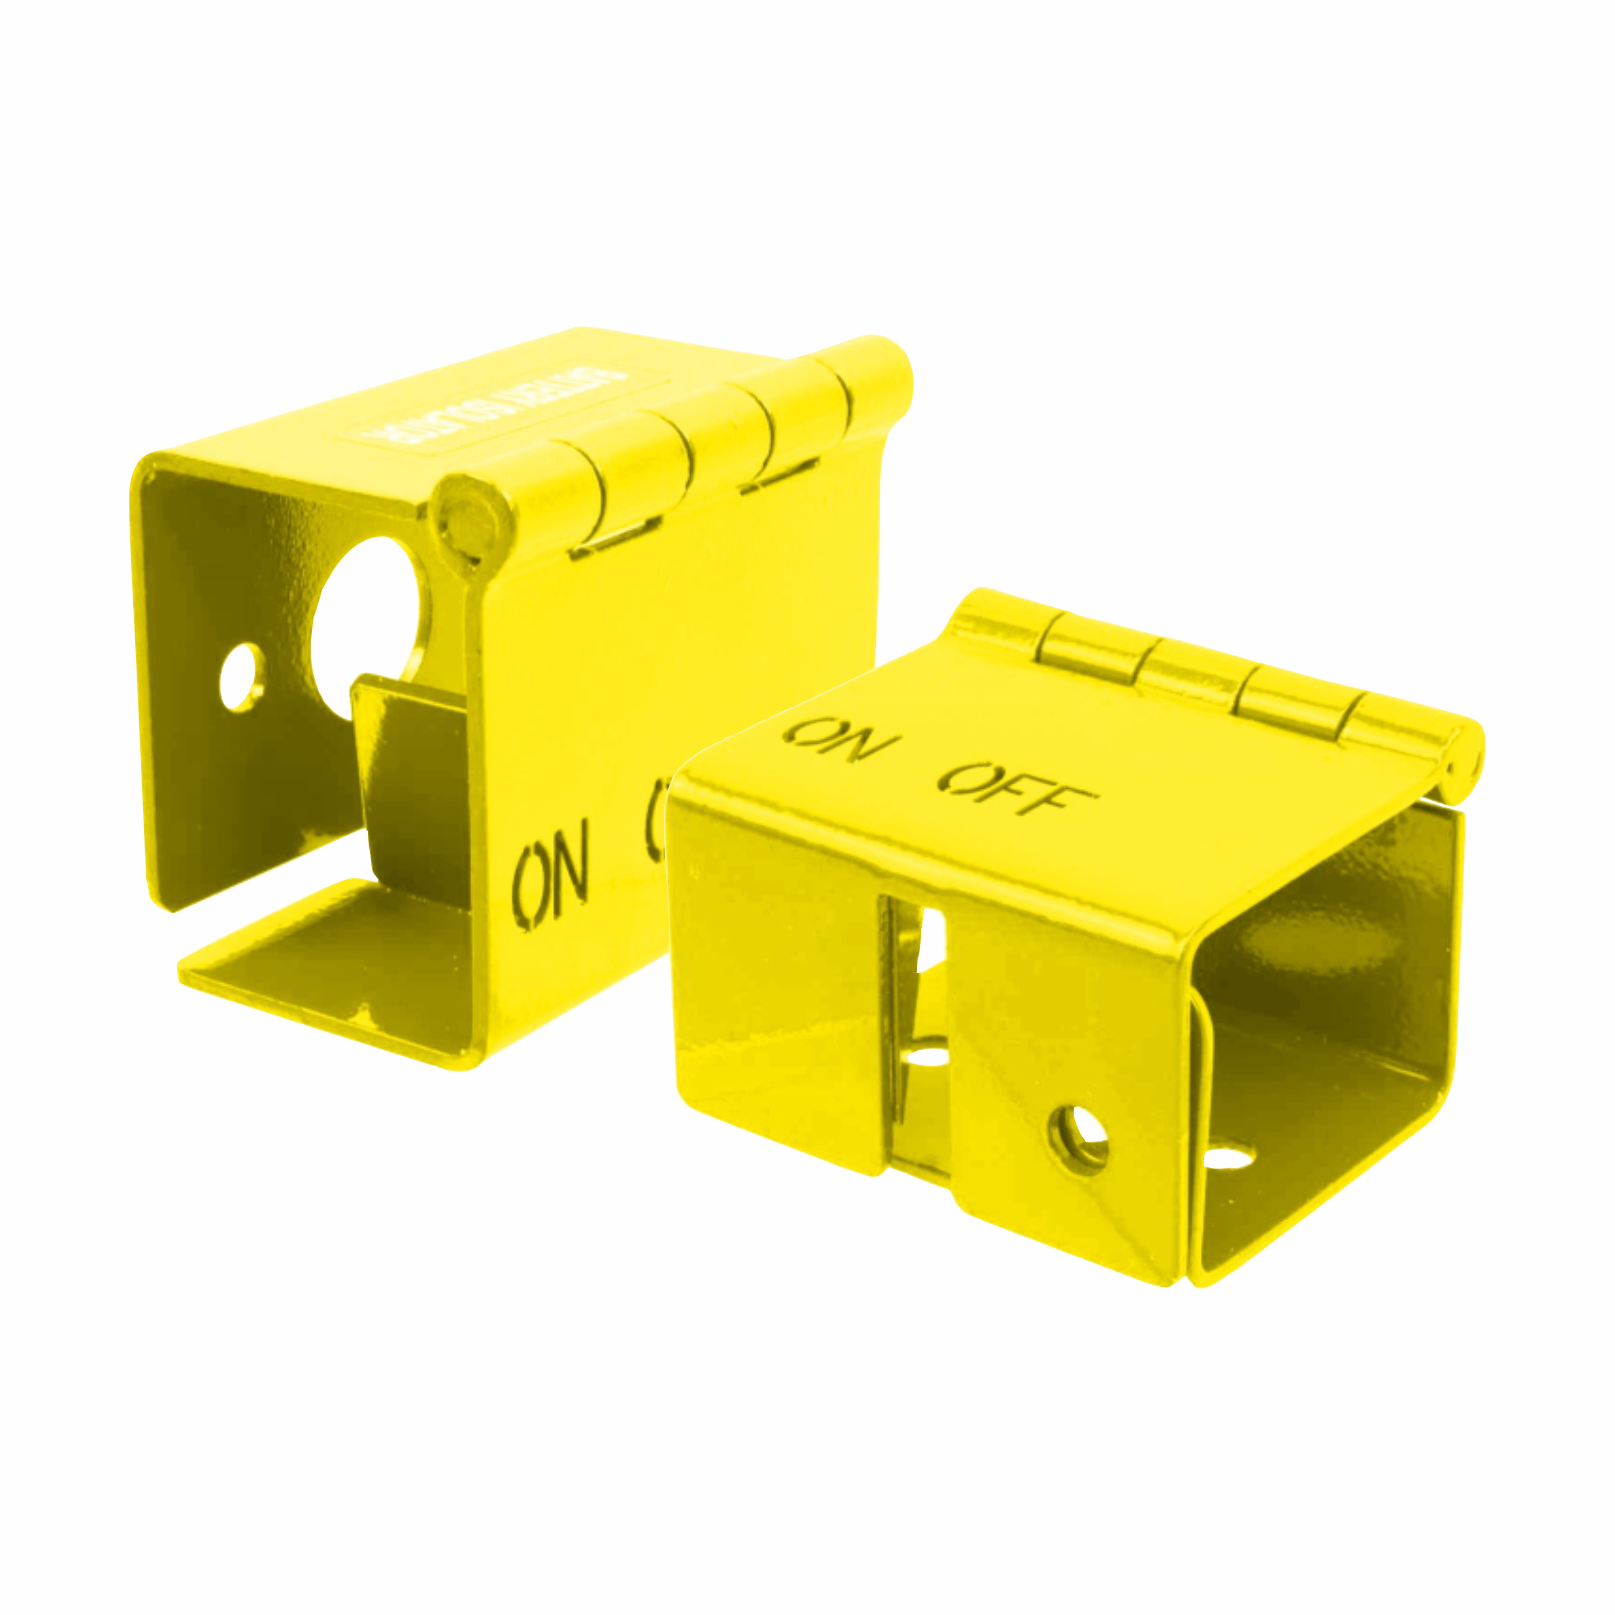 Lock box yellow 